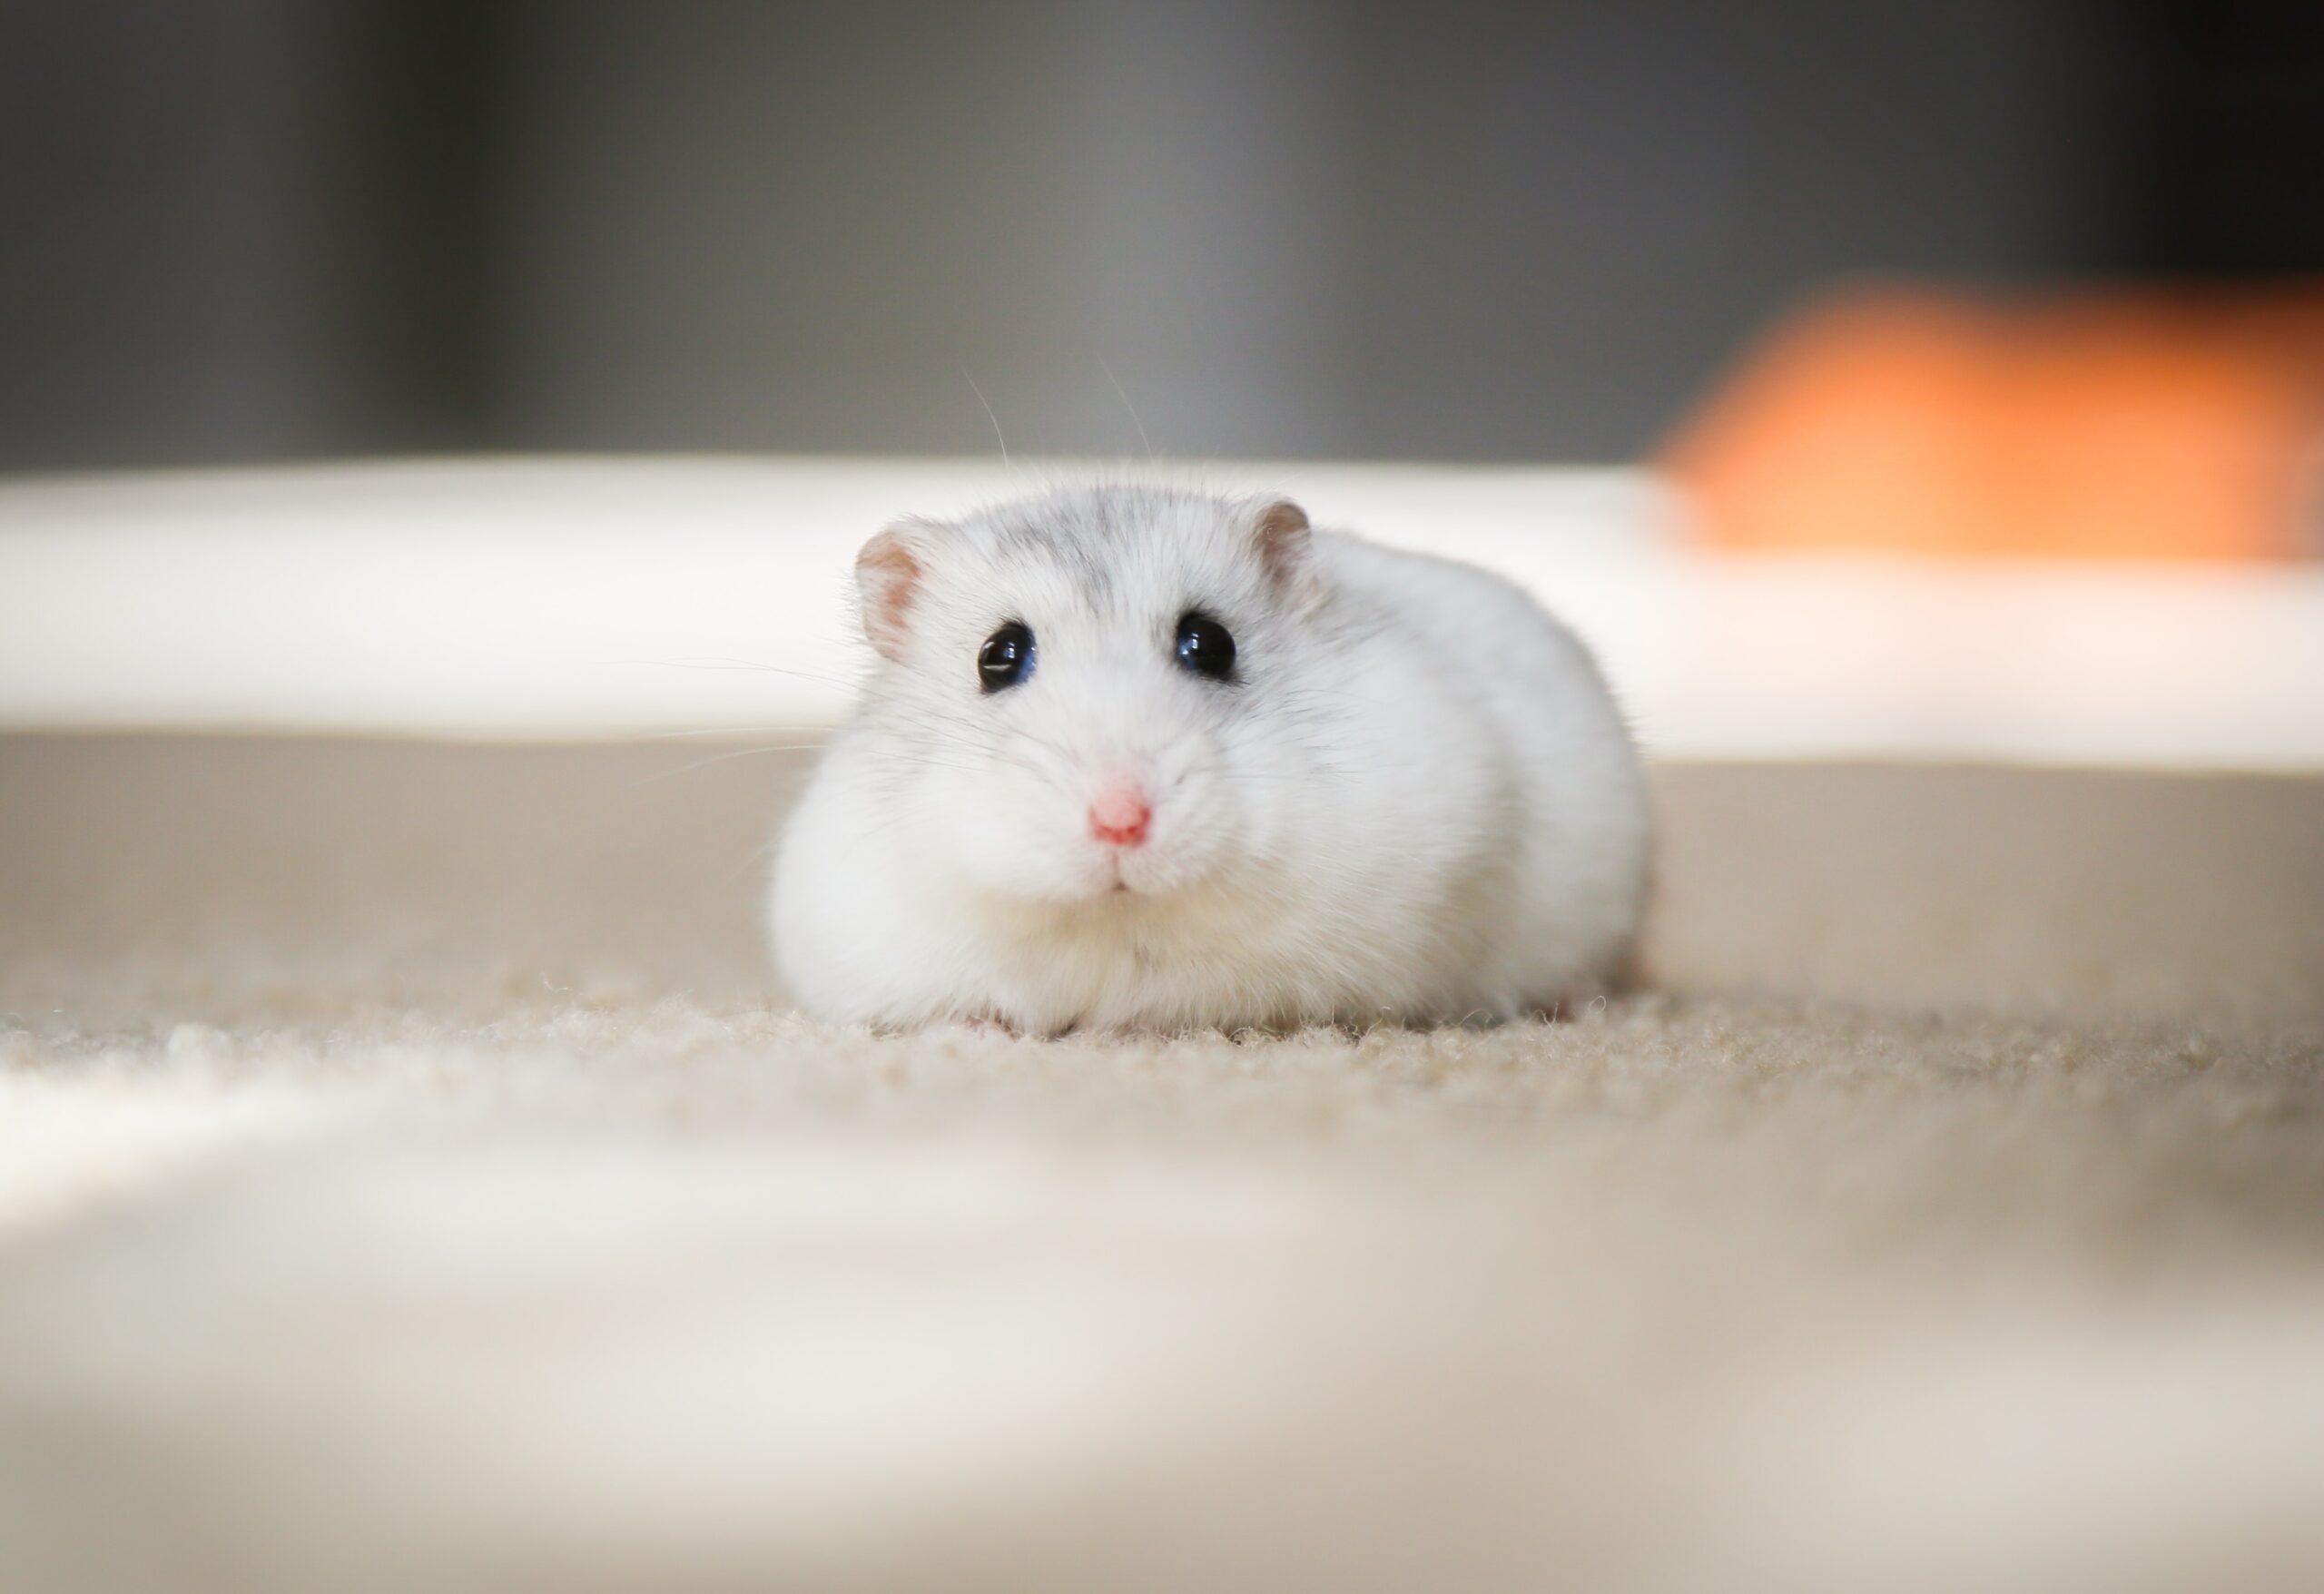 Common Hamster Behaviors: What Is Normal?